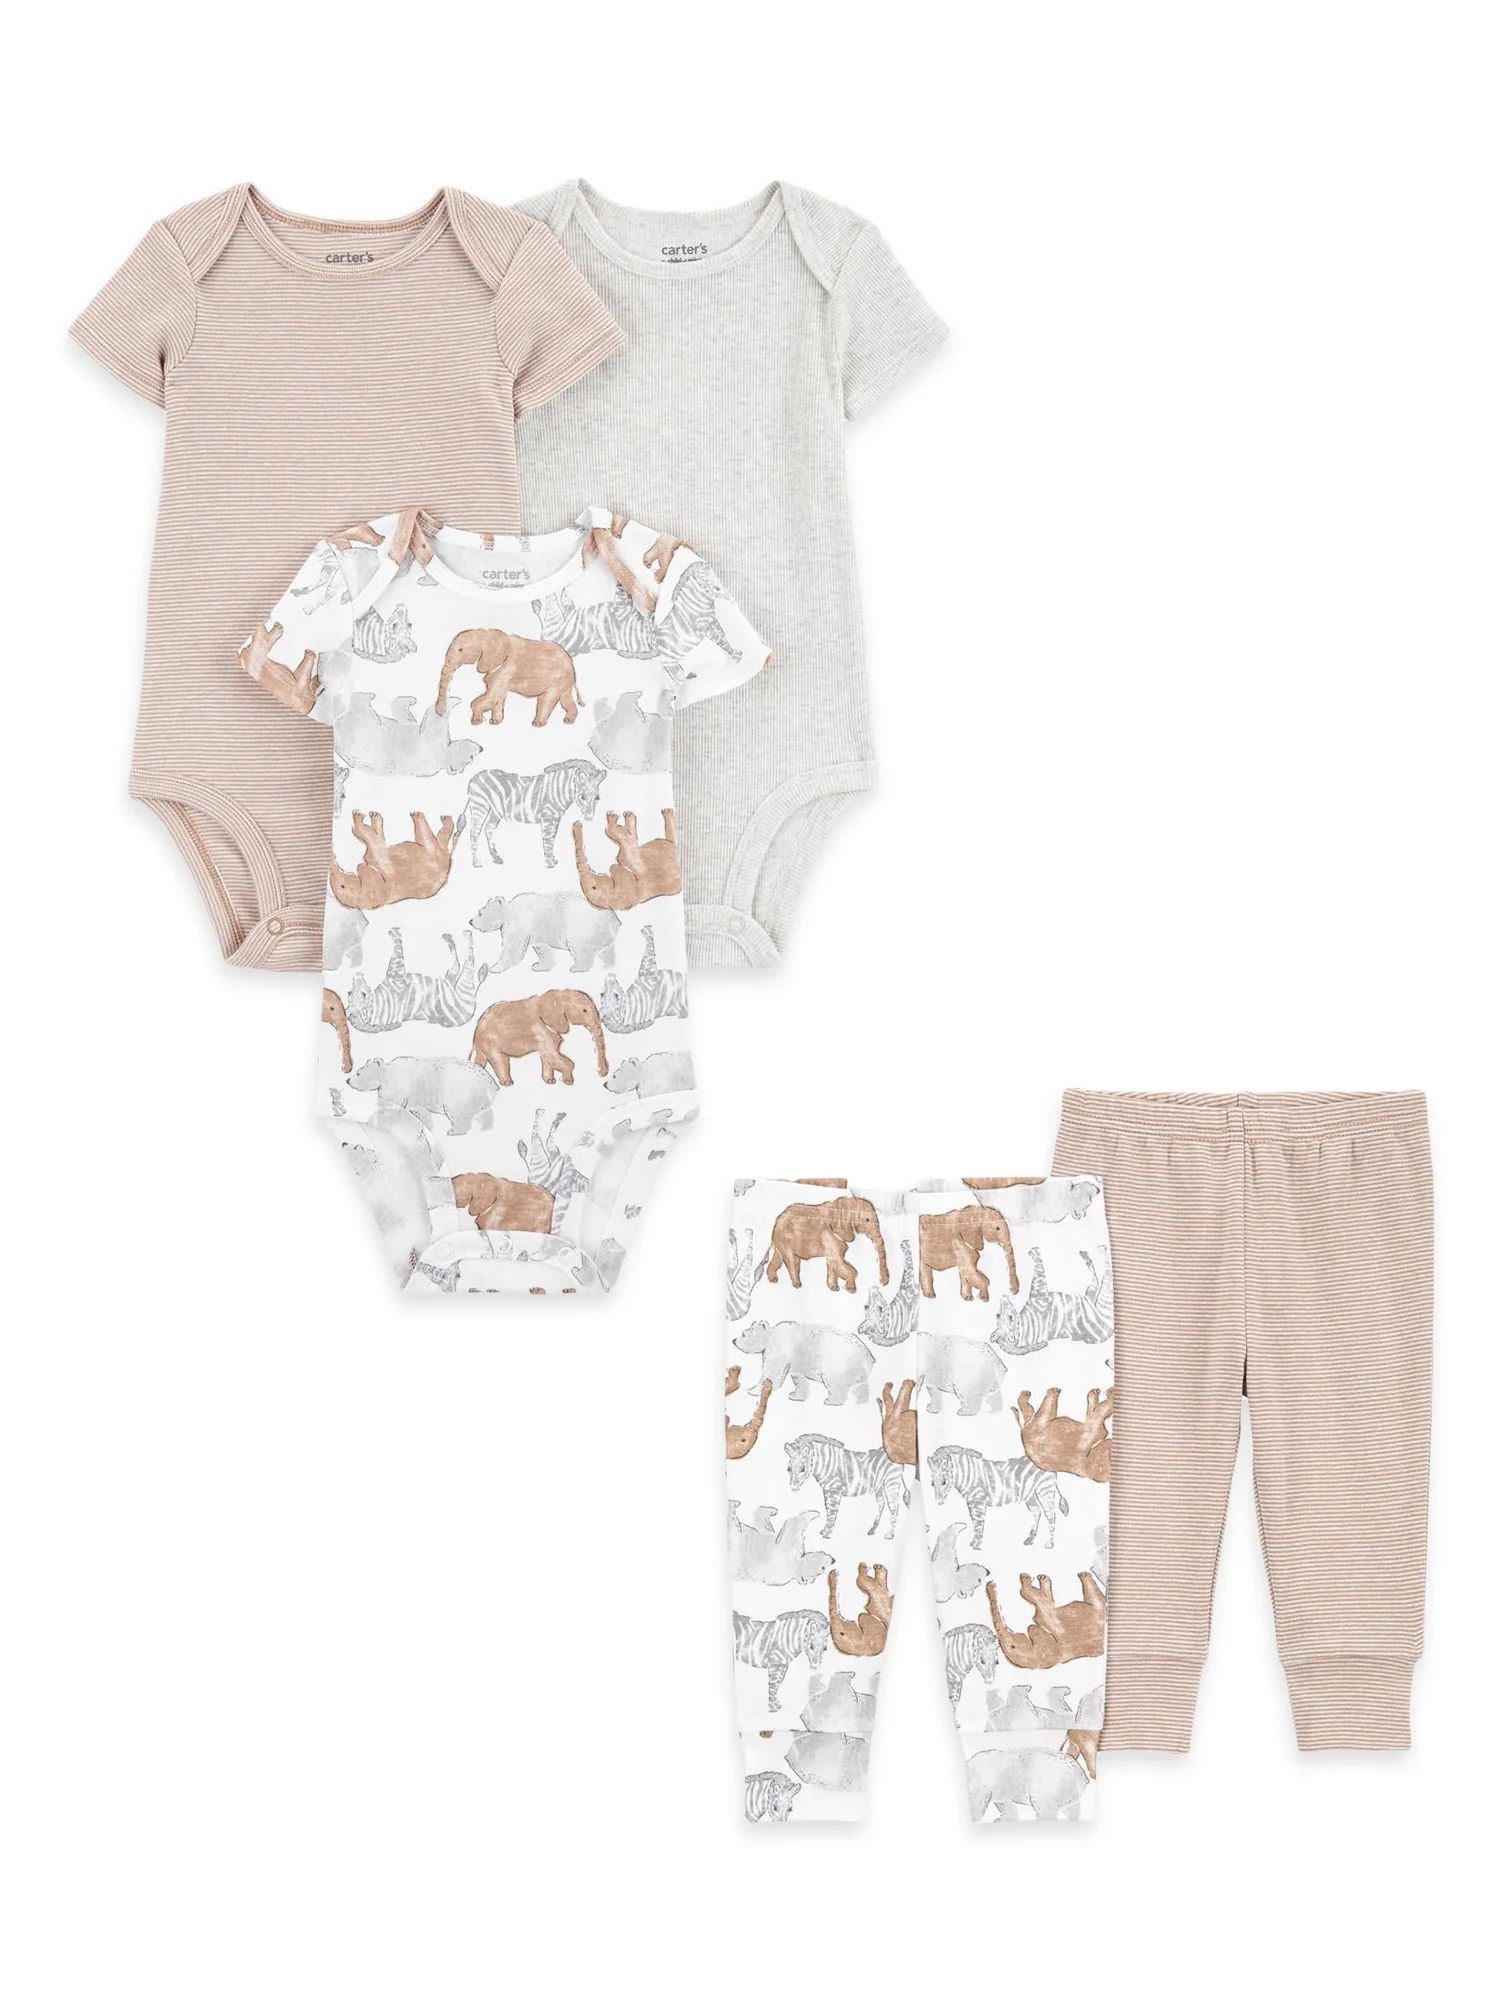 Carter's Child of Mine Baby Unisex Bodysuit and Pant Set, 5-Piece, Sizes Preemie-18 Months | Walmart (US)